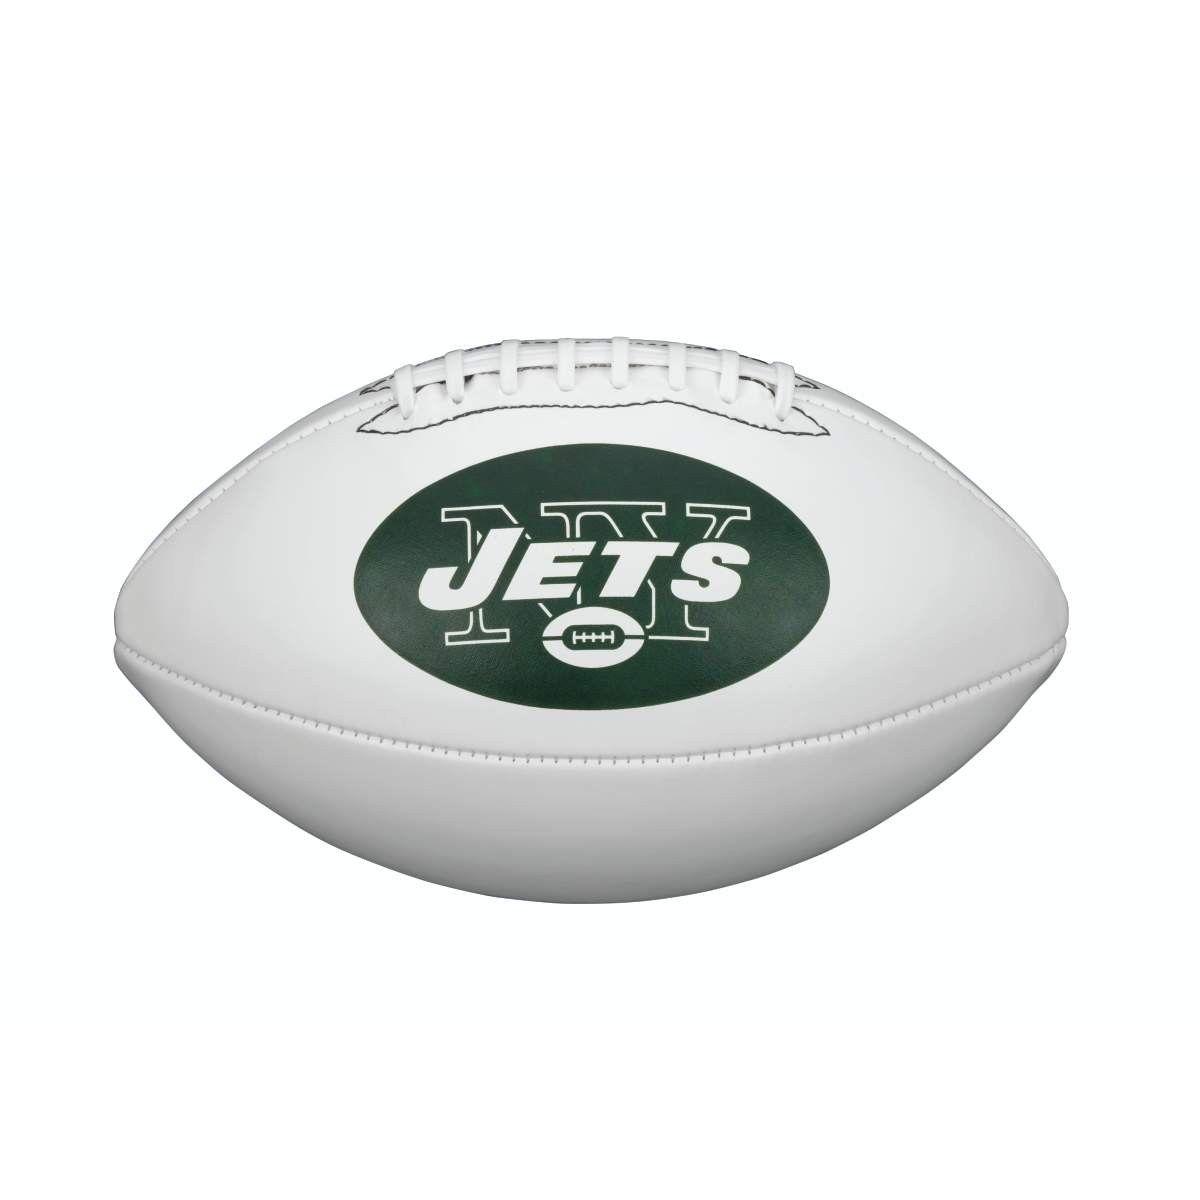 Jets Football Logo - NFL TEAM LOGO AUTOGRAPH FOOTBALL, NEW YORK JETS. Wilson